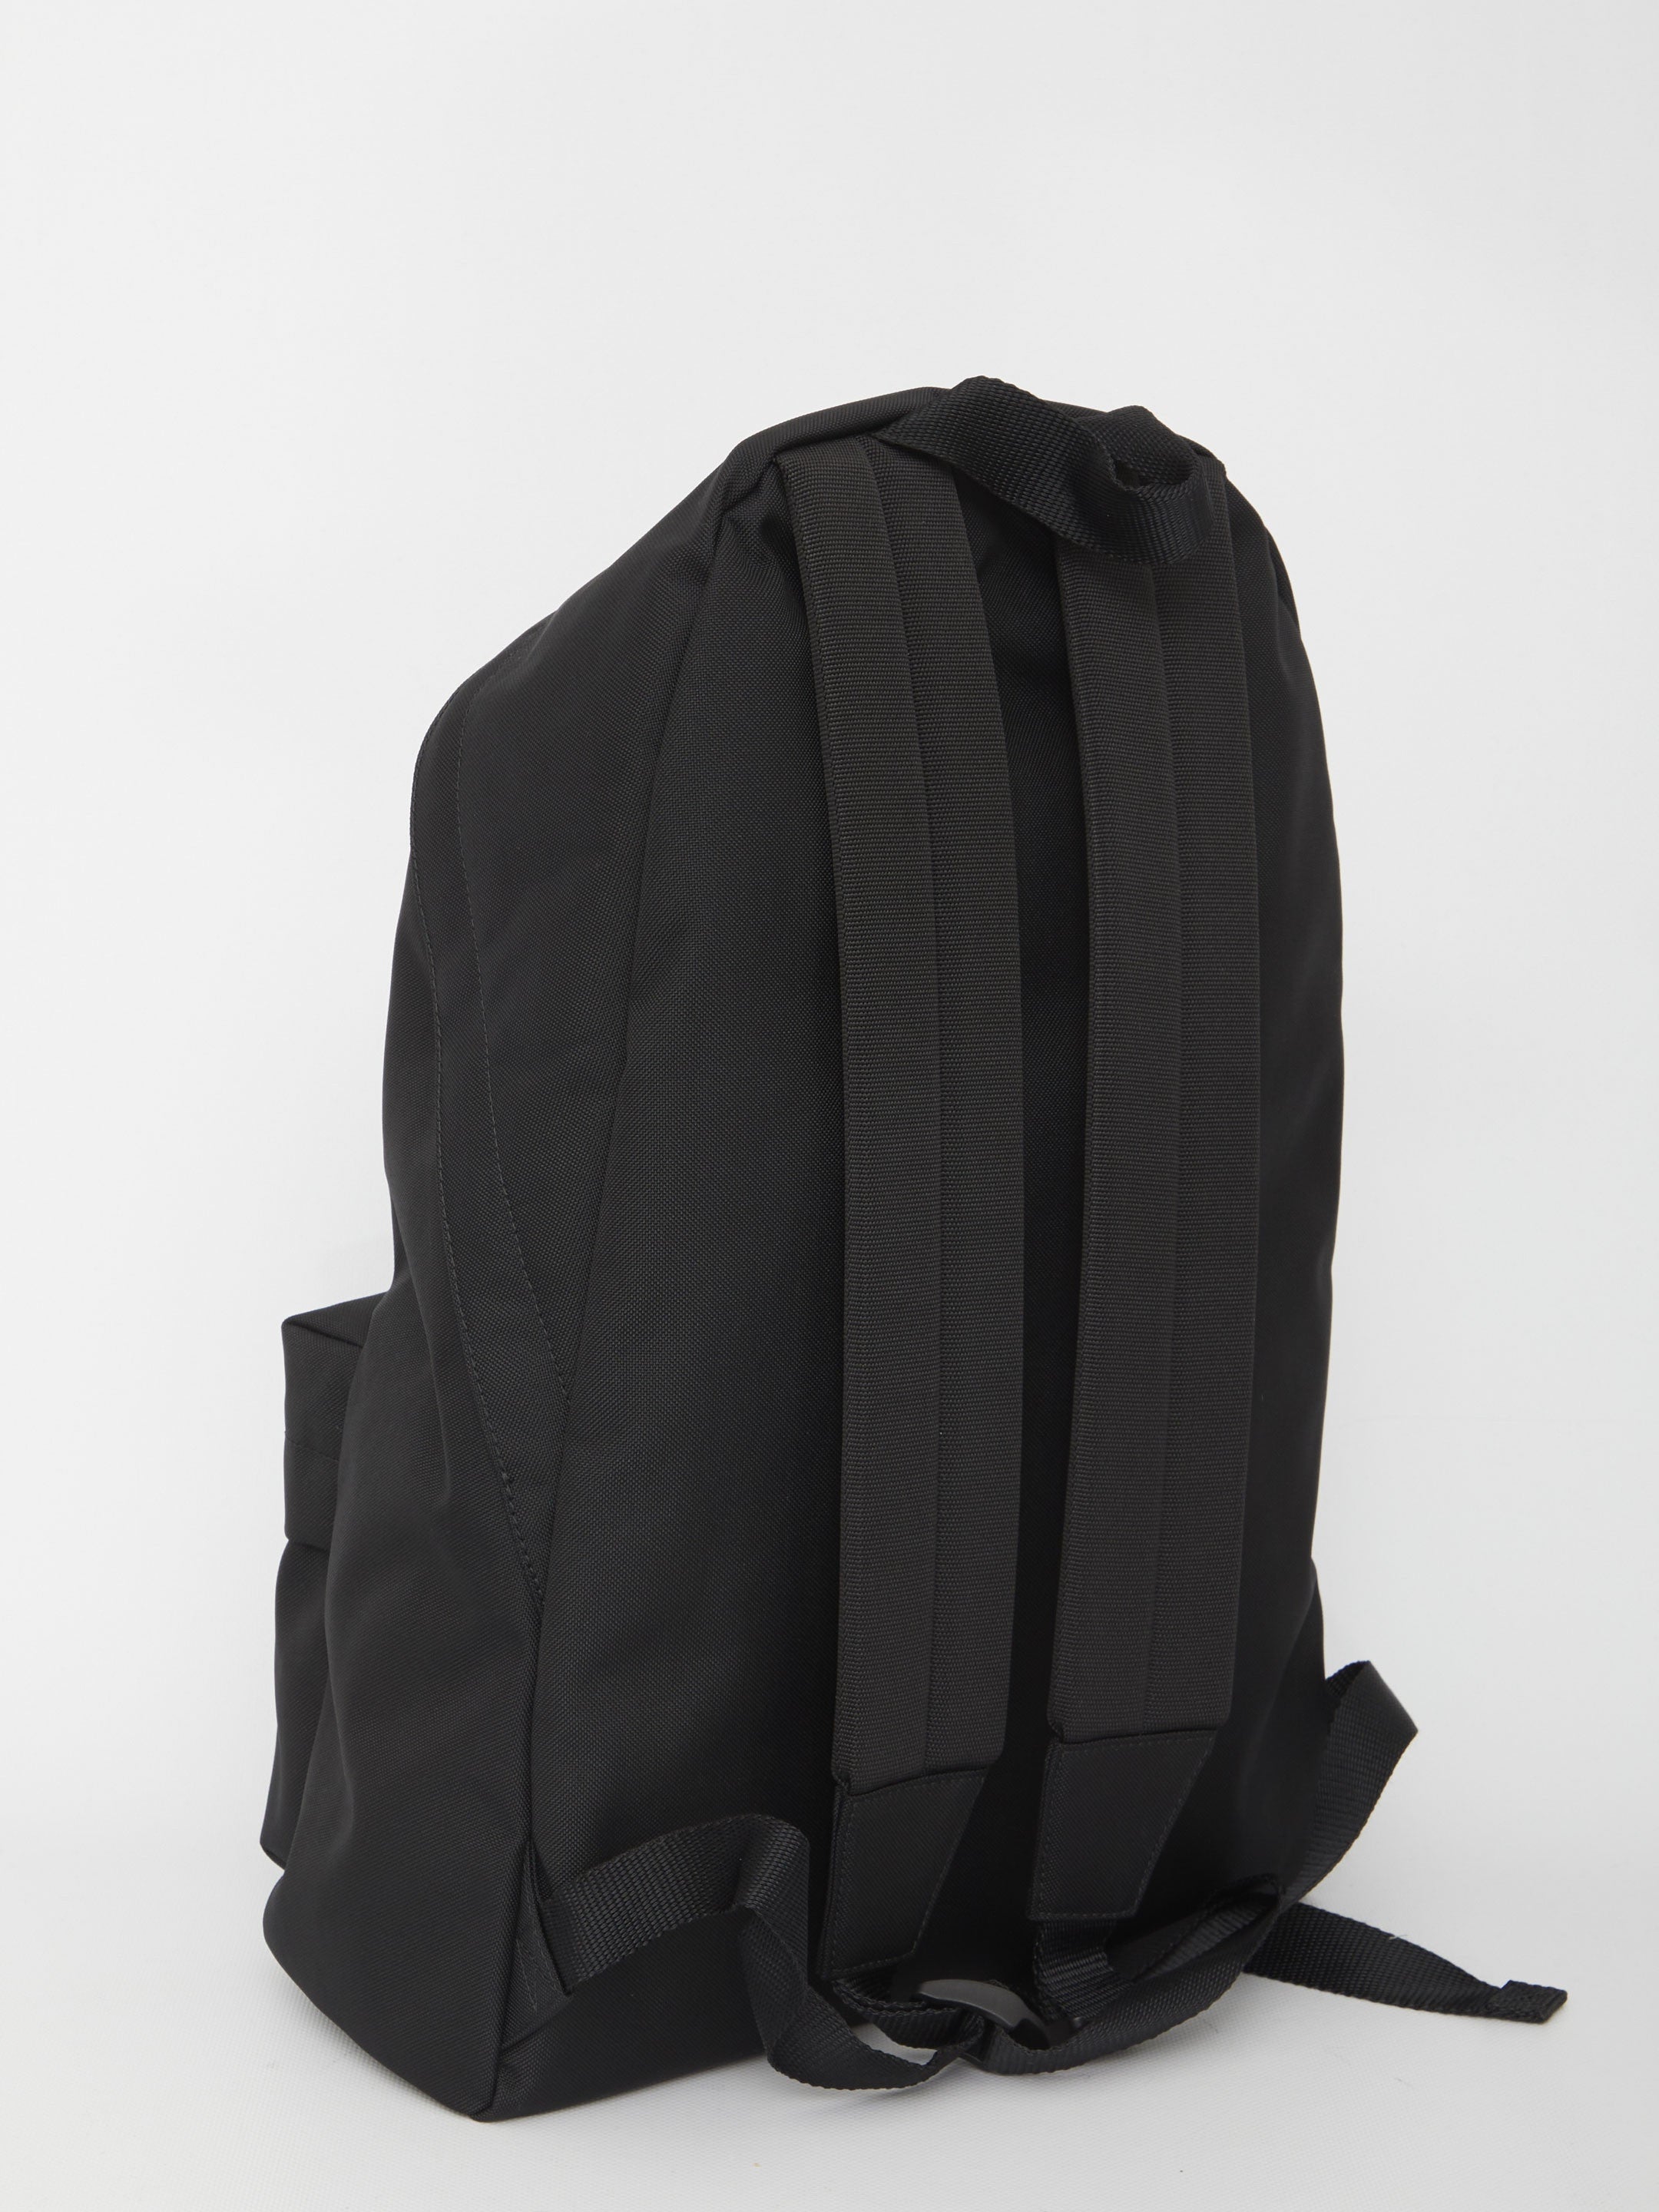 BALENCIAGA-OUTLET-SALE-Explorer-backpack-Taschen-QT-BLACK-ARCHIVE-COLLECTION-2.jpg